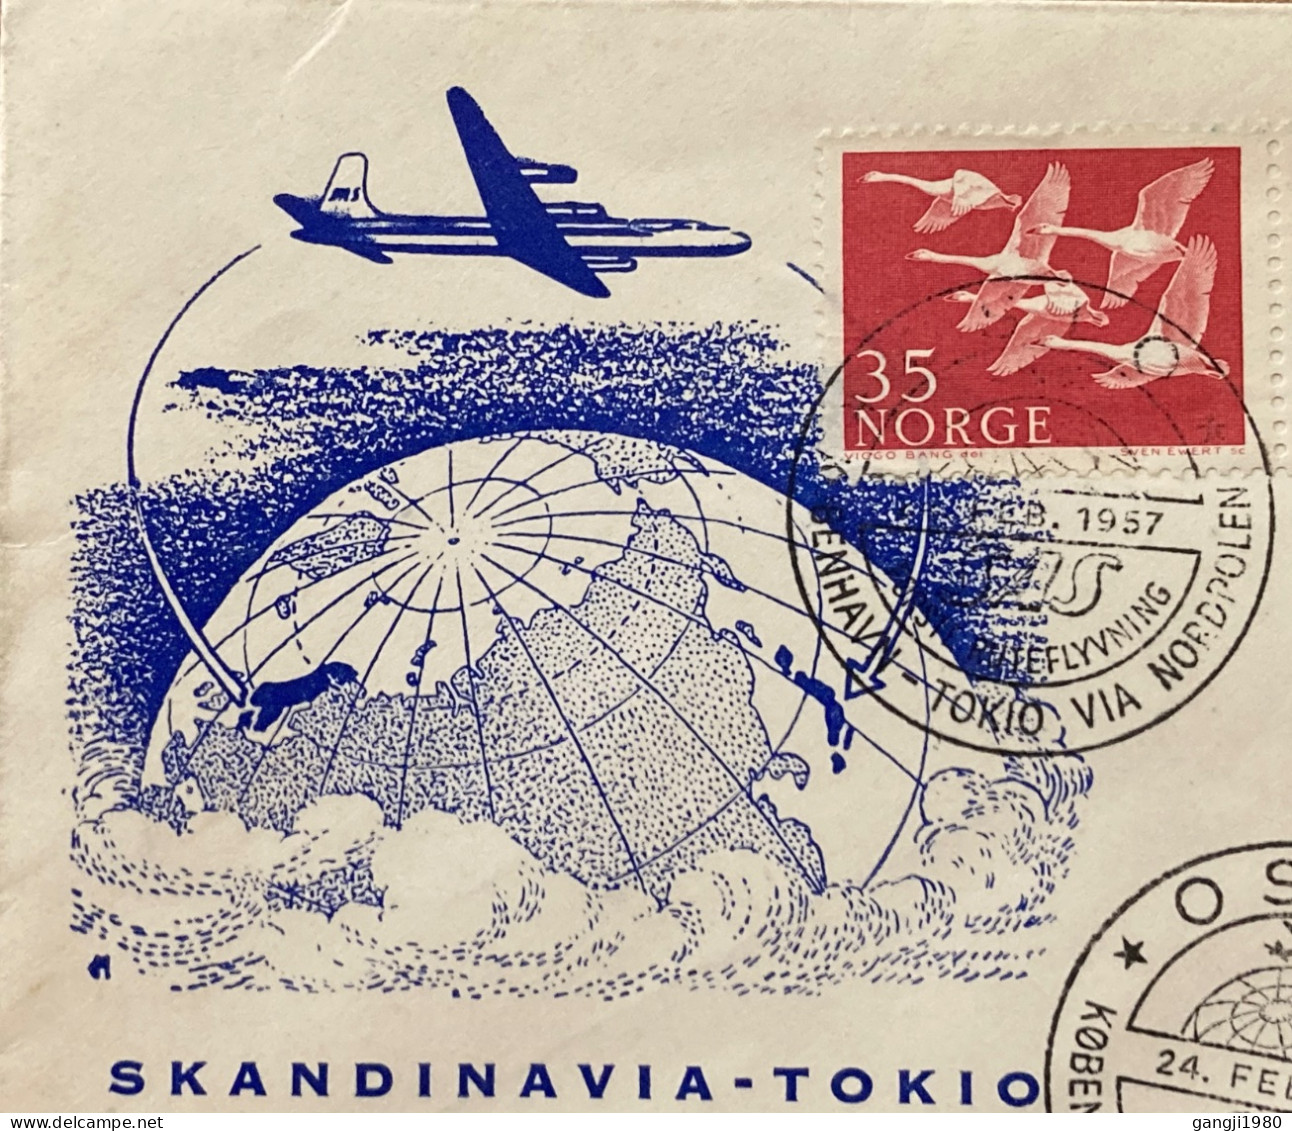 NORWAY 1957, FIRST FLIGHT COVER TO JAPAN, KOPEHAVEN -TO KYO VIA NORDPOLEN OSLO, TOKYO CITY CANCEL, ILLUSTRATE PLANE ON G - Brieven En Documenten